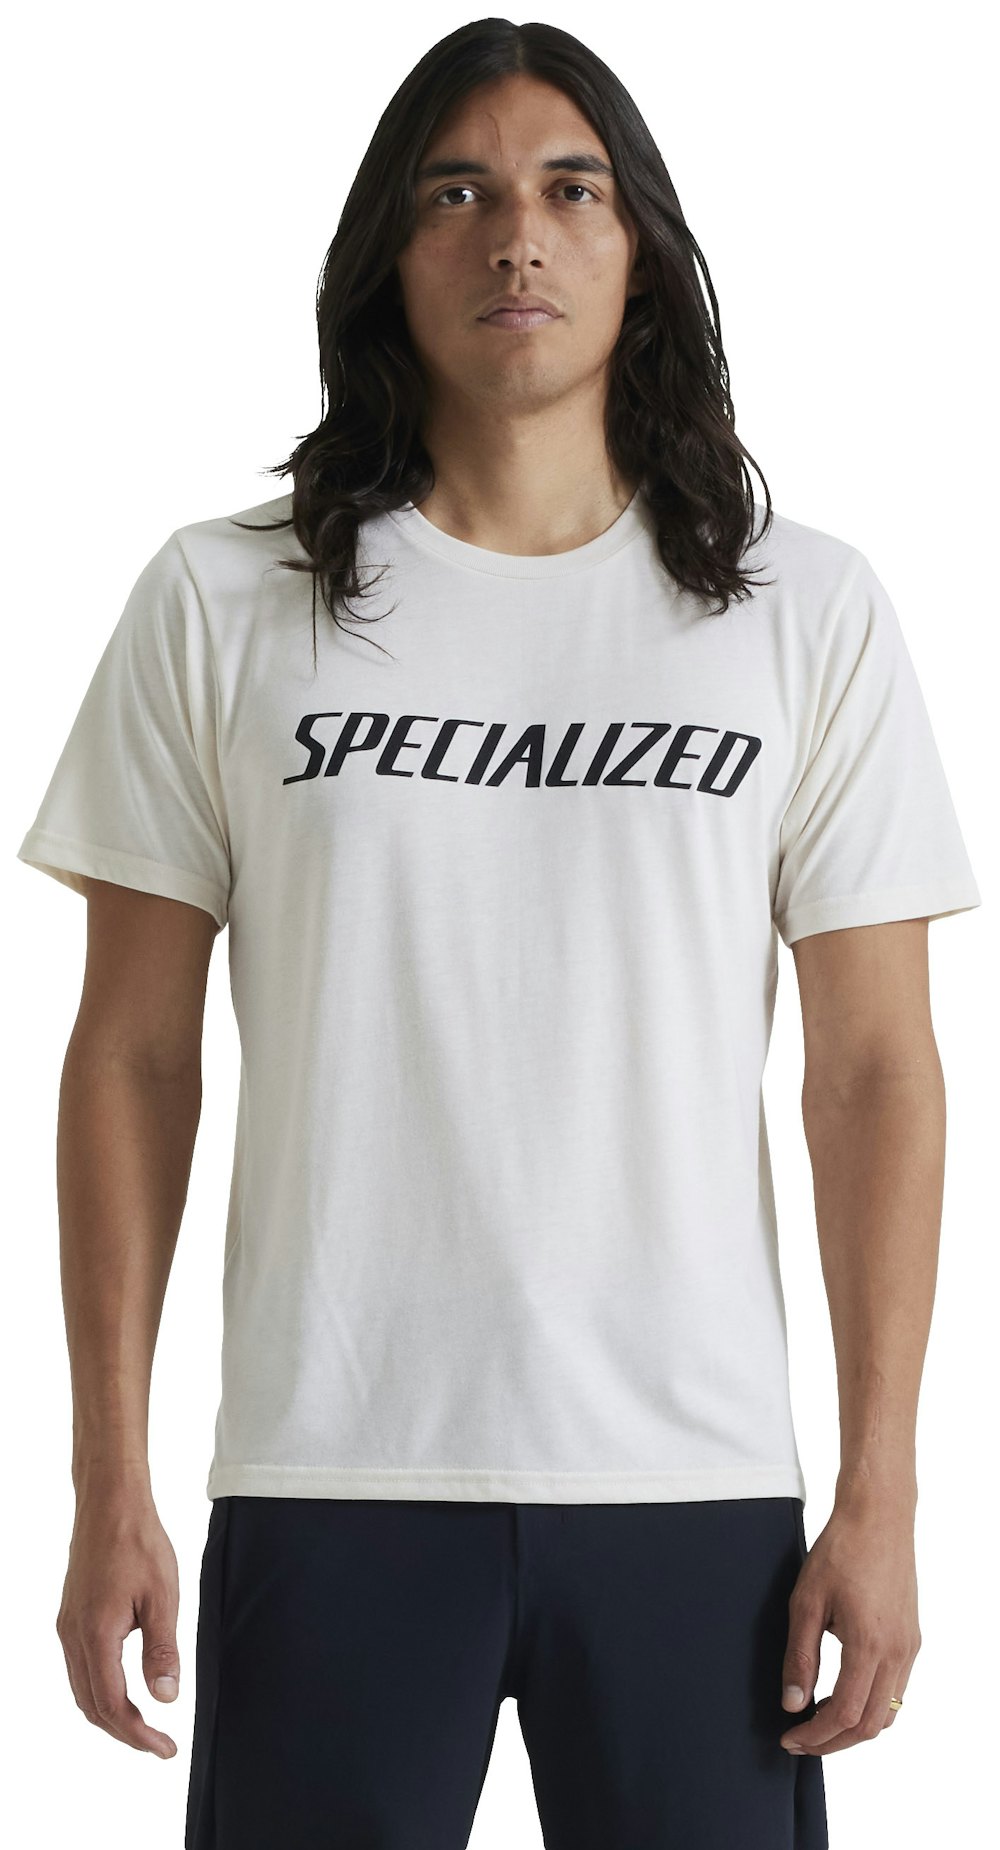 Specialized Wordmark Short Sleeve T-Shirt